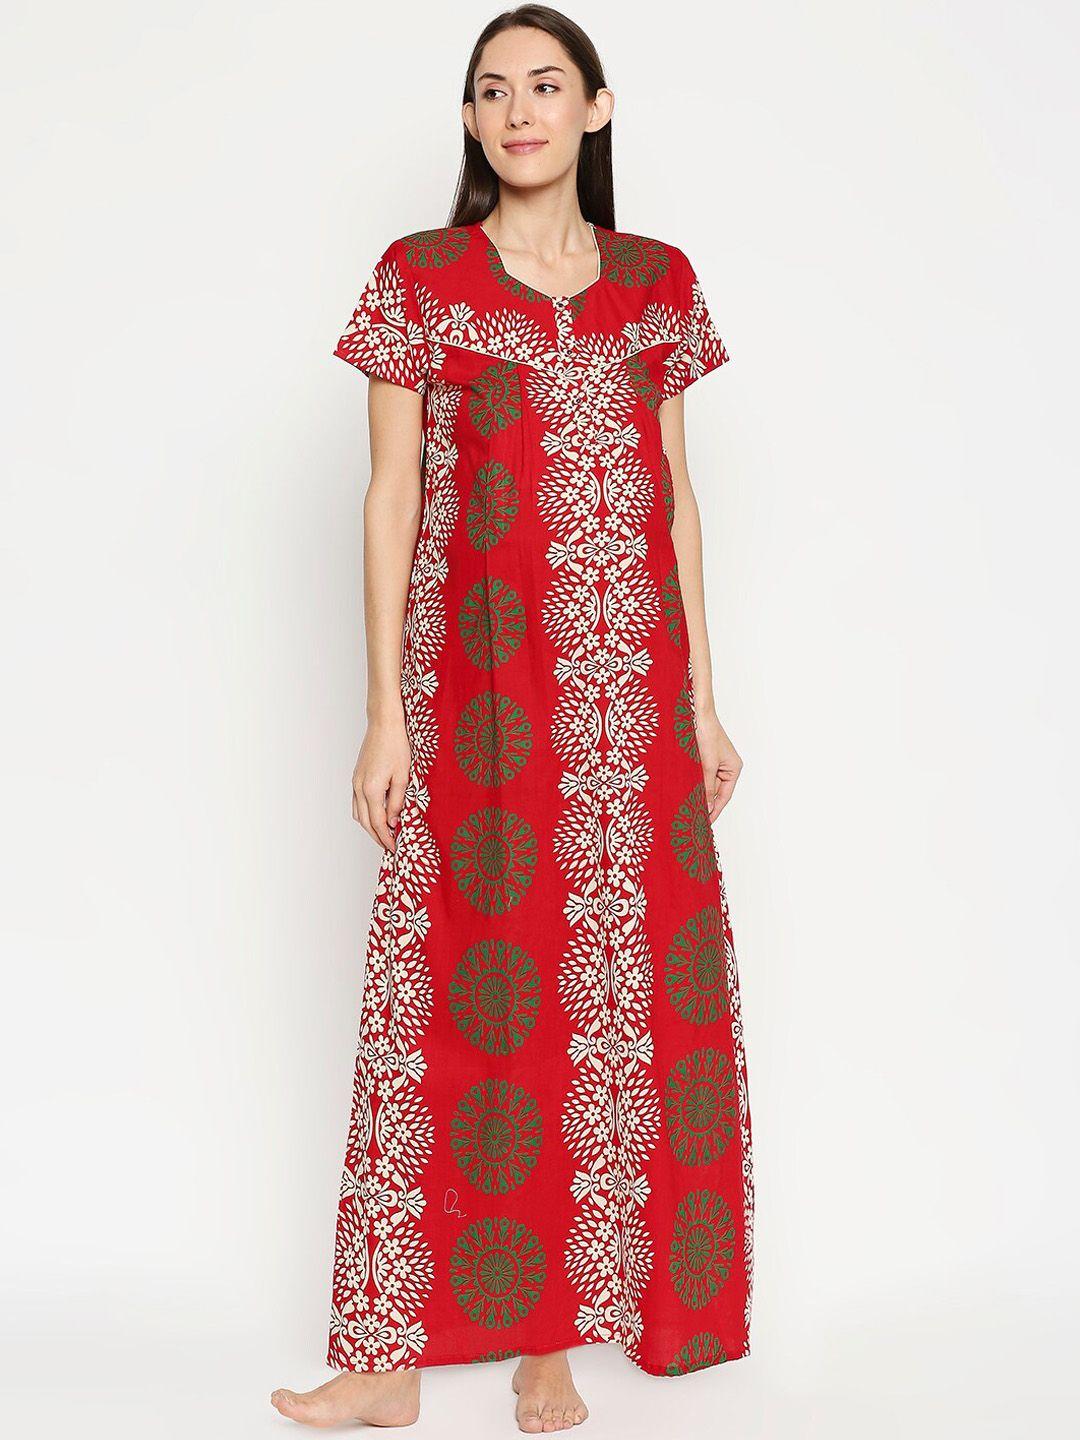 av2-red-&-white-printed-nightdress